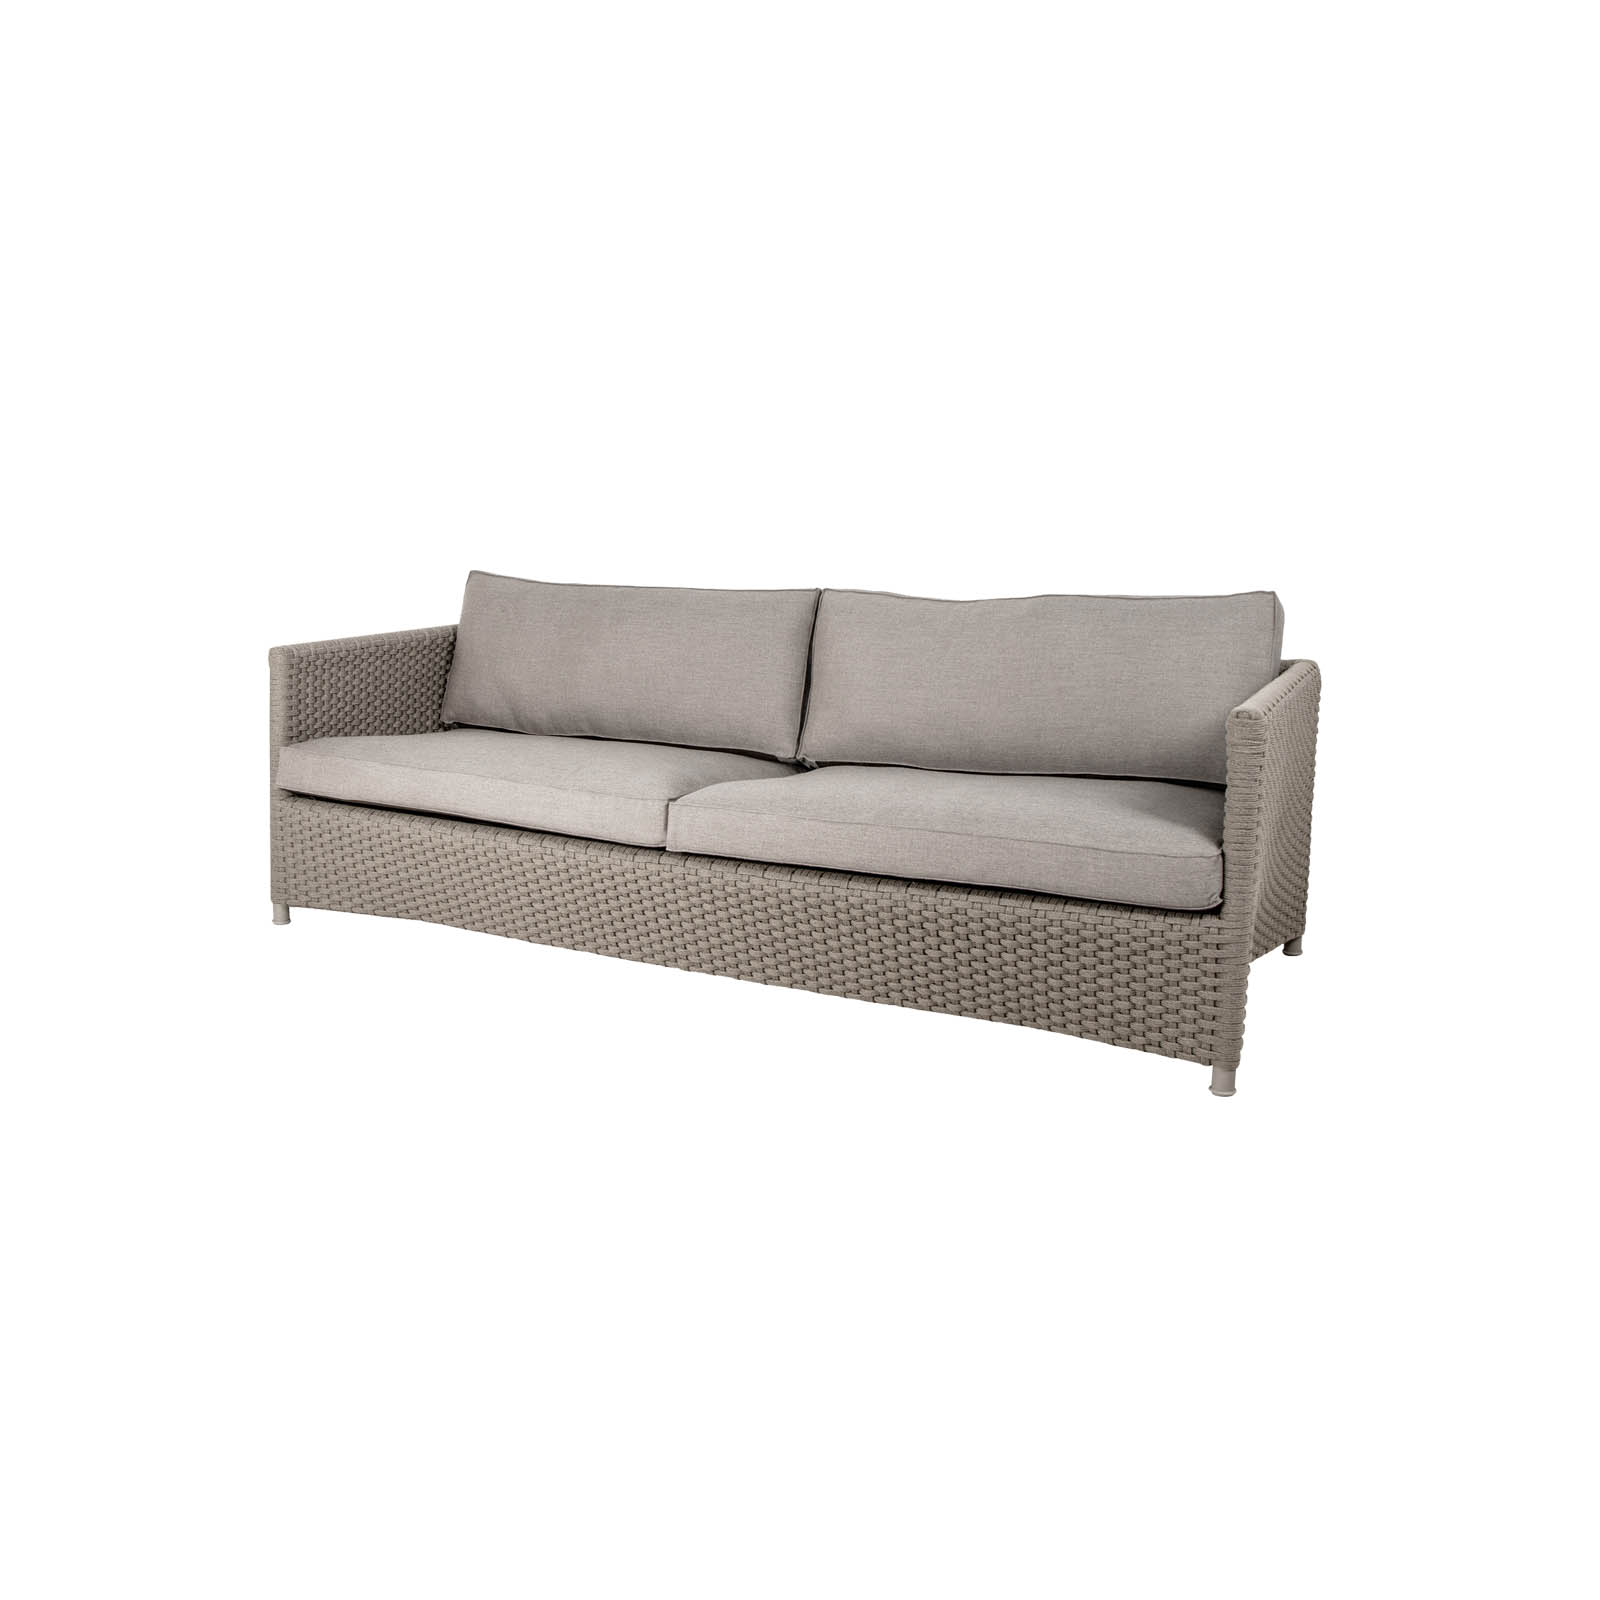 Diamond 3-Sitzer Sofa aus Cane-line Soft Rope in Taupe mit Kissen aus Cane-line Natté in Taupe